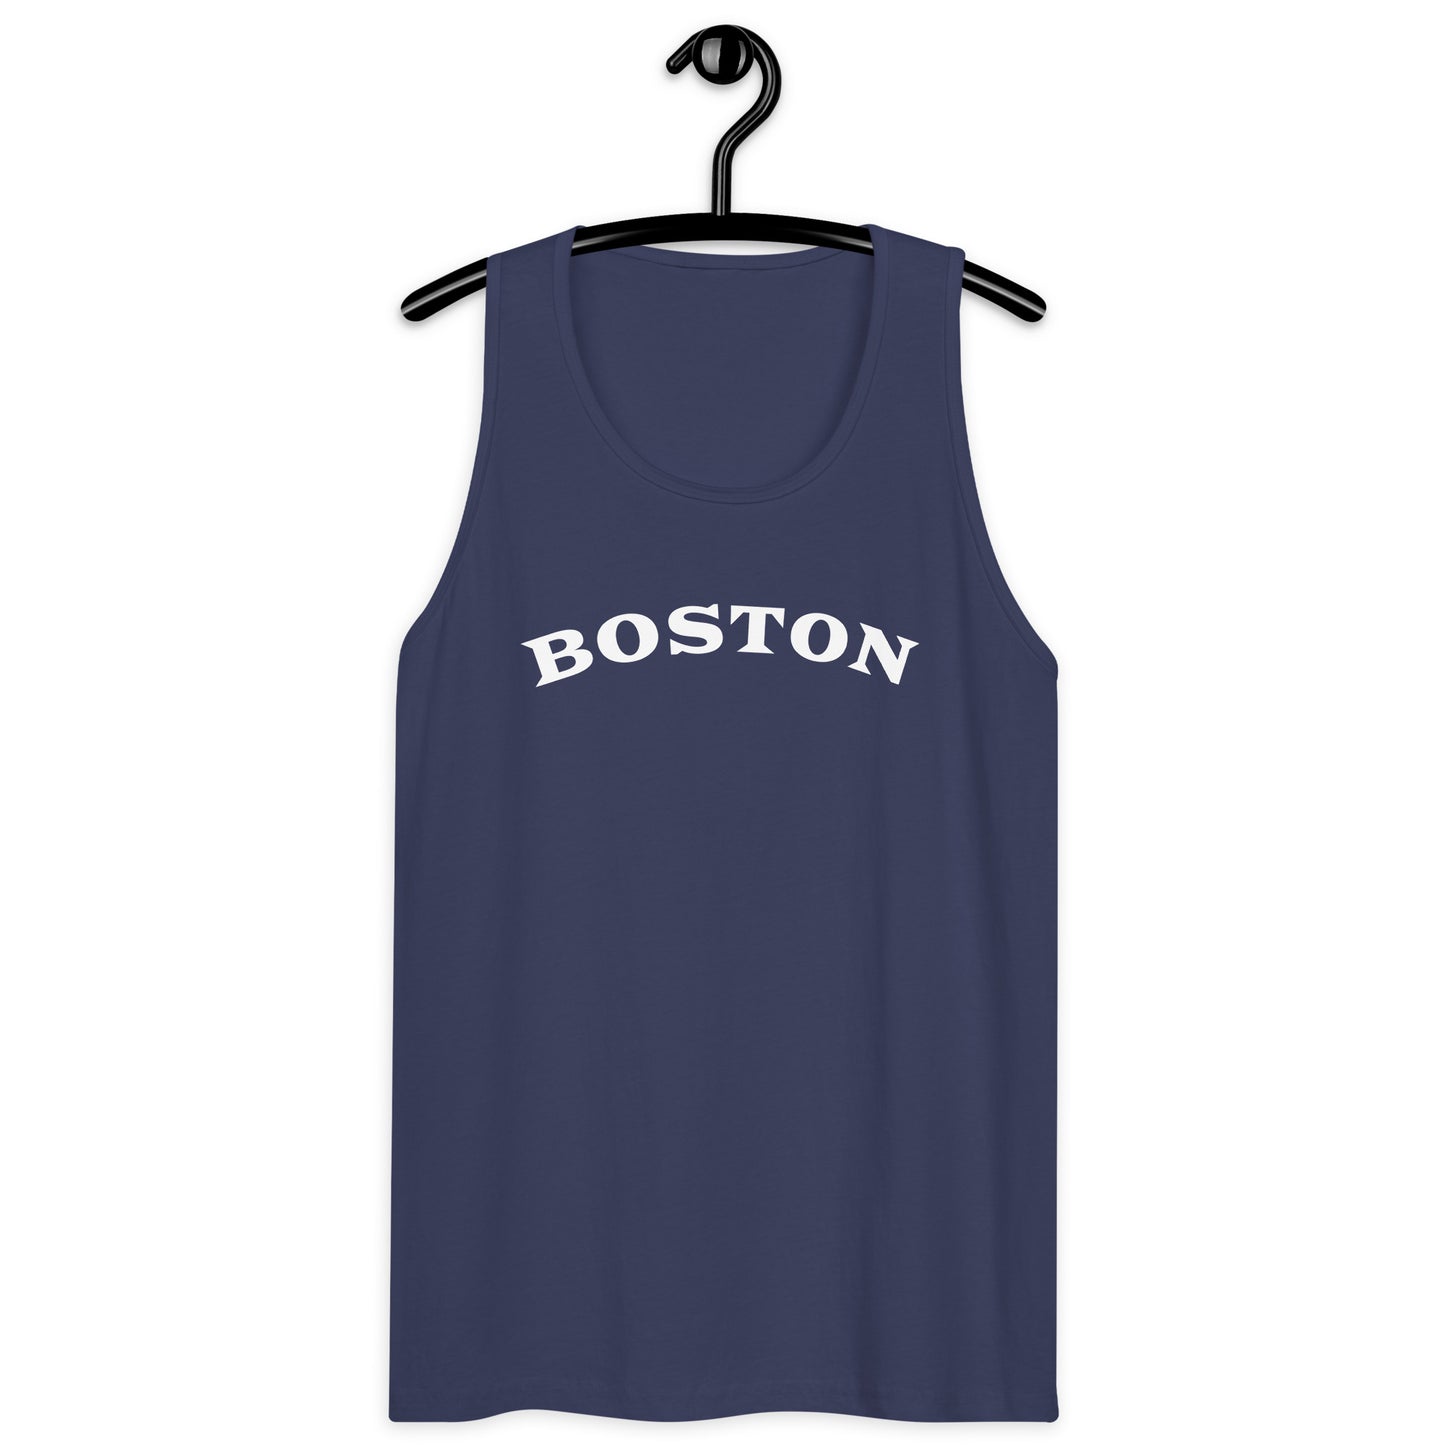 Boston men’s premium tank top